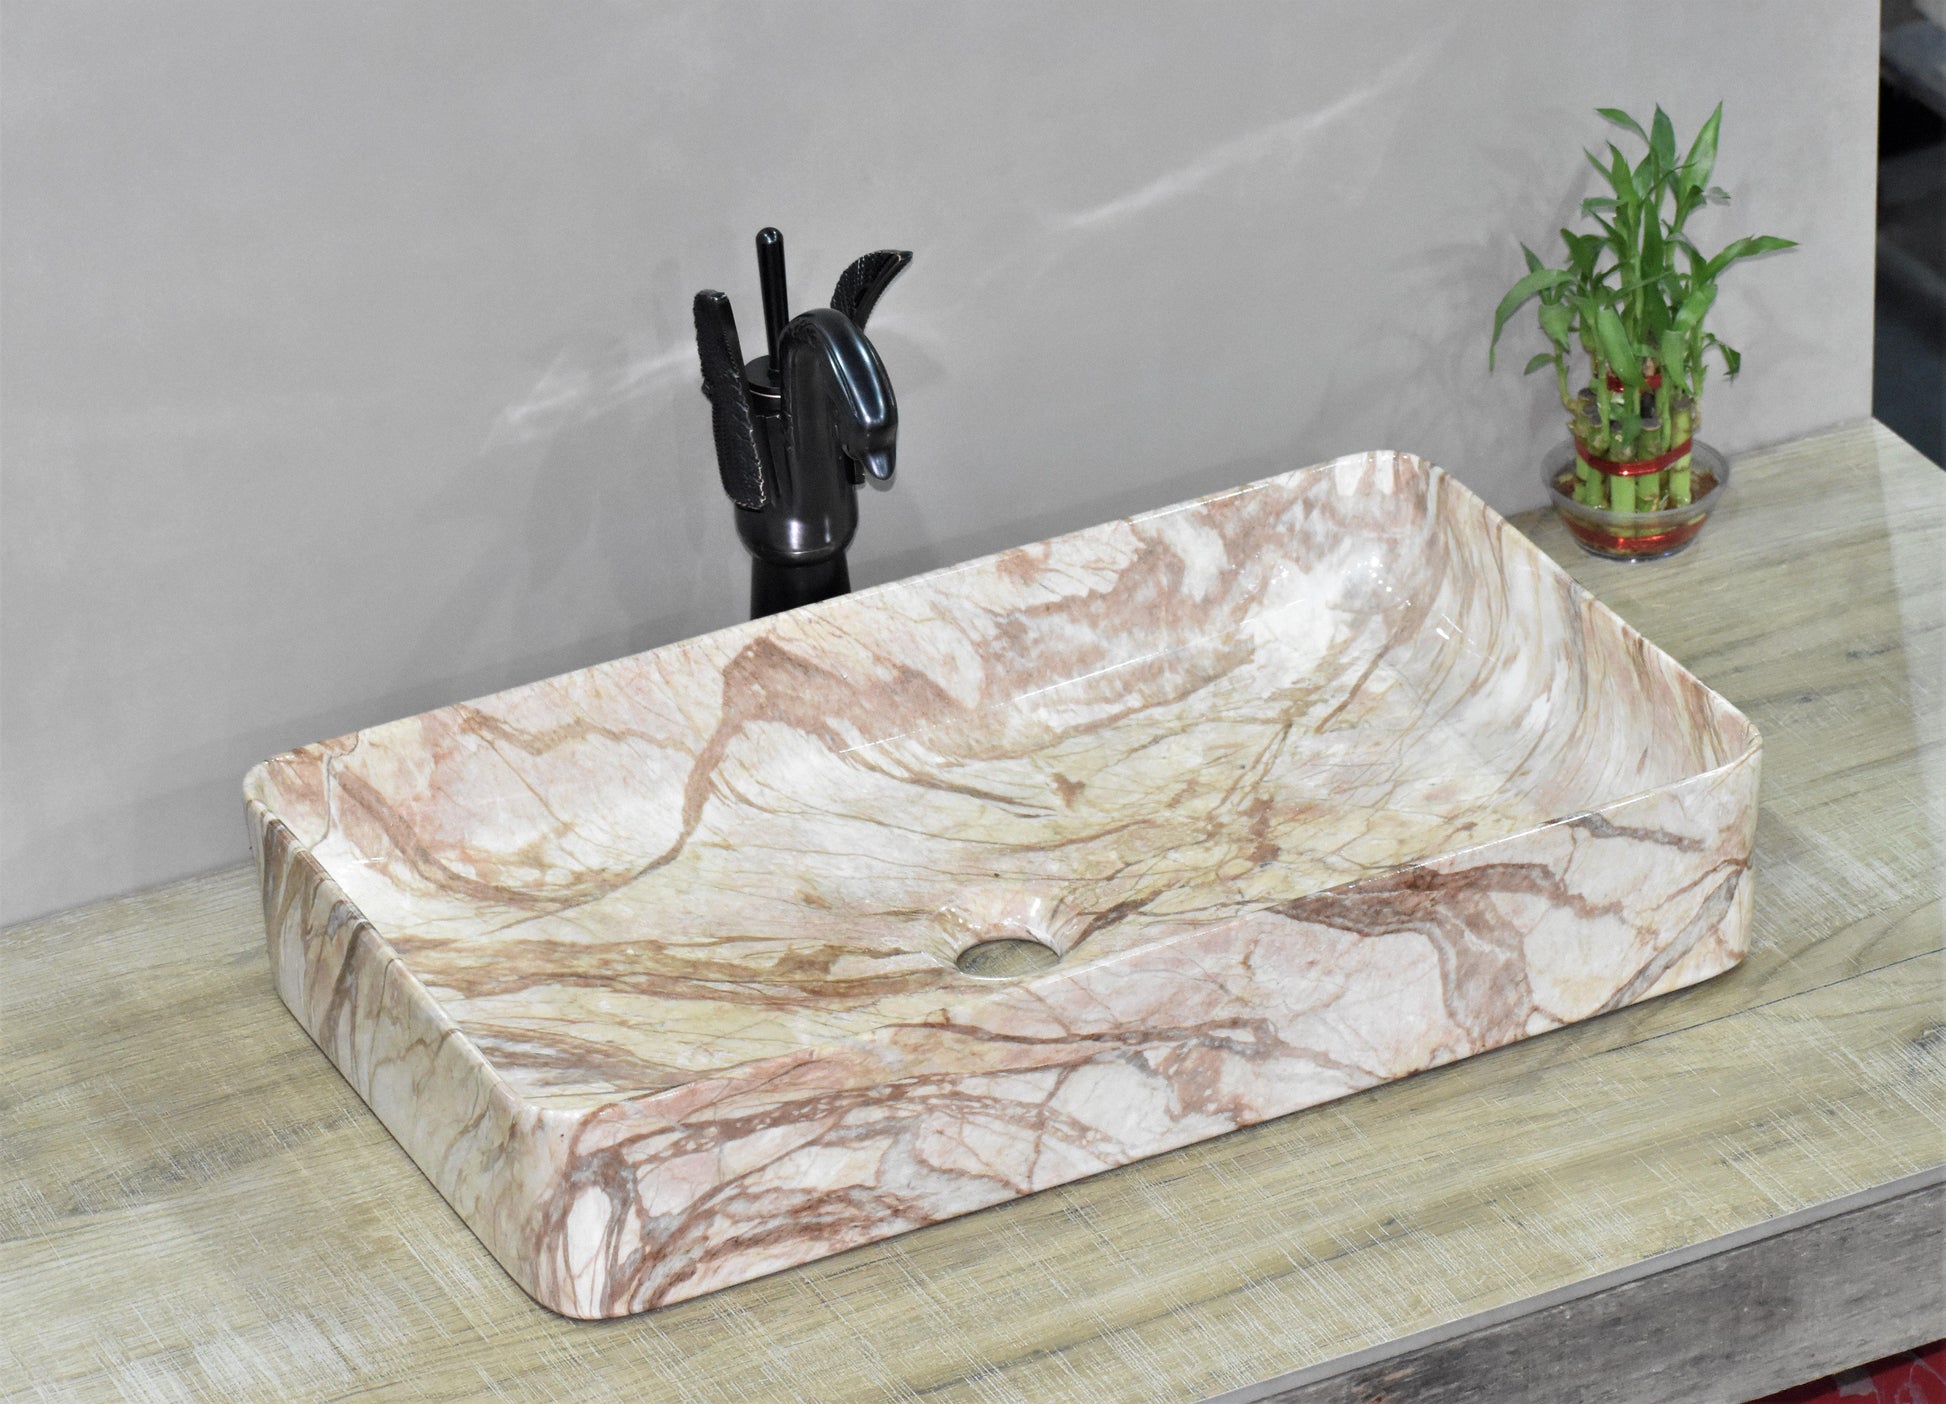 Ceramic Premium Desisgner Table Top Over Counter Vessel Sink Wash Basin for Bathroom 24 x 14 x 4.5 Inch Rectangle Shape Saffron Marble - Bath Outlet